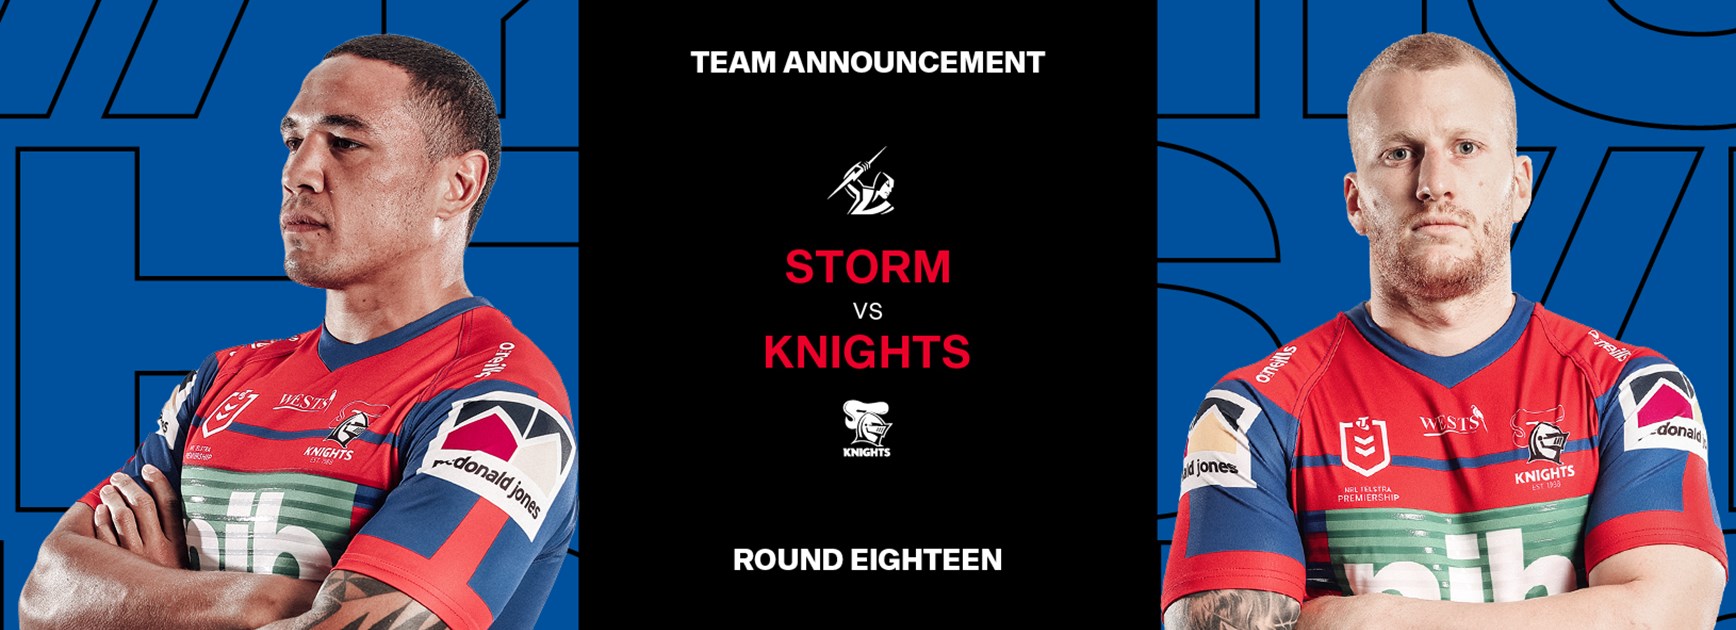 Knights v Storm Round 18 NRL team list